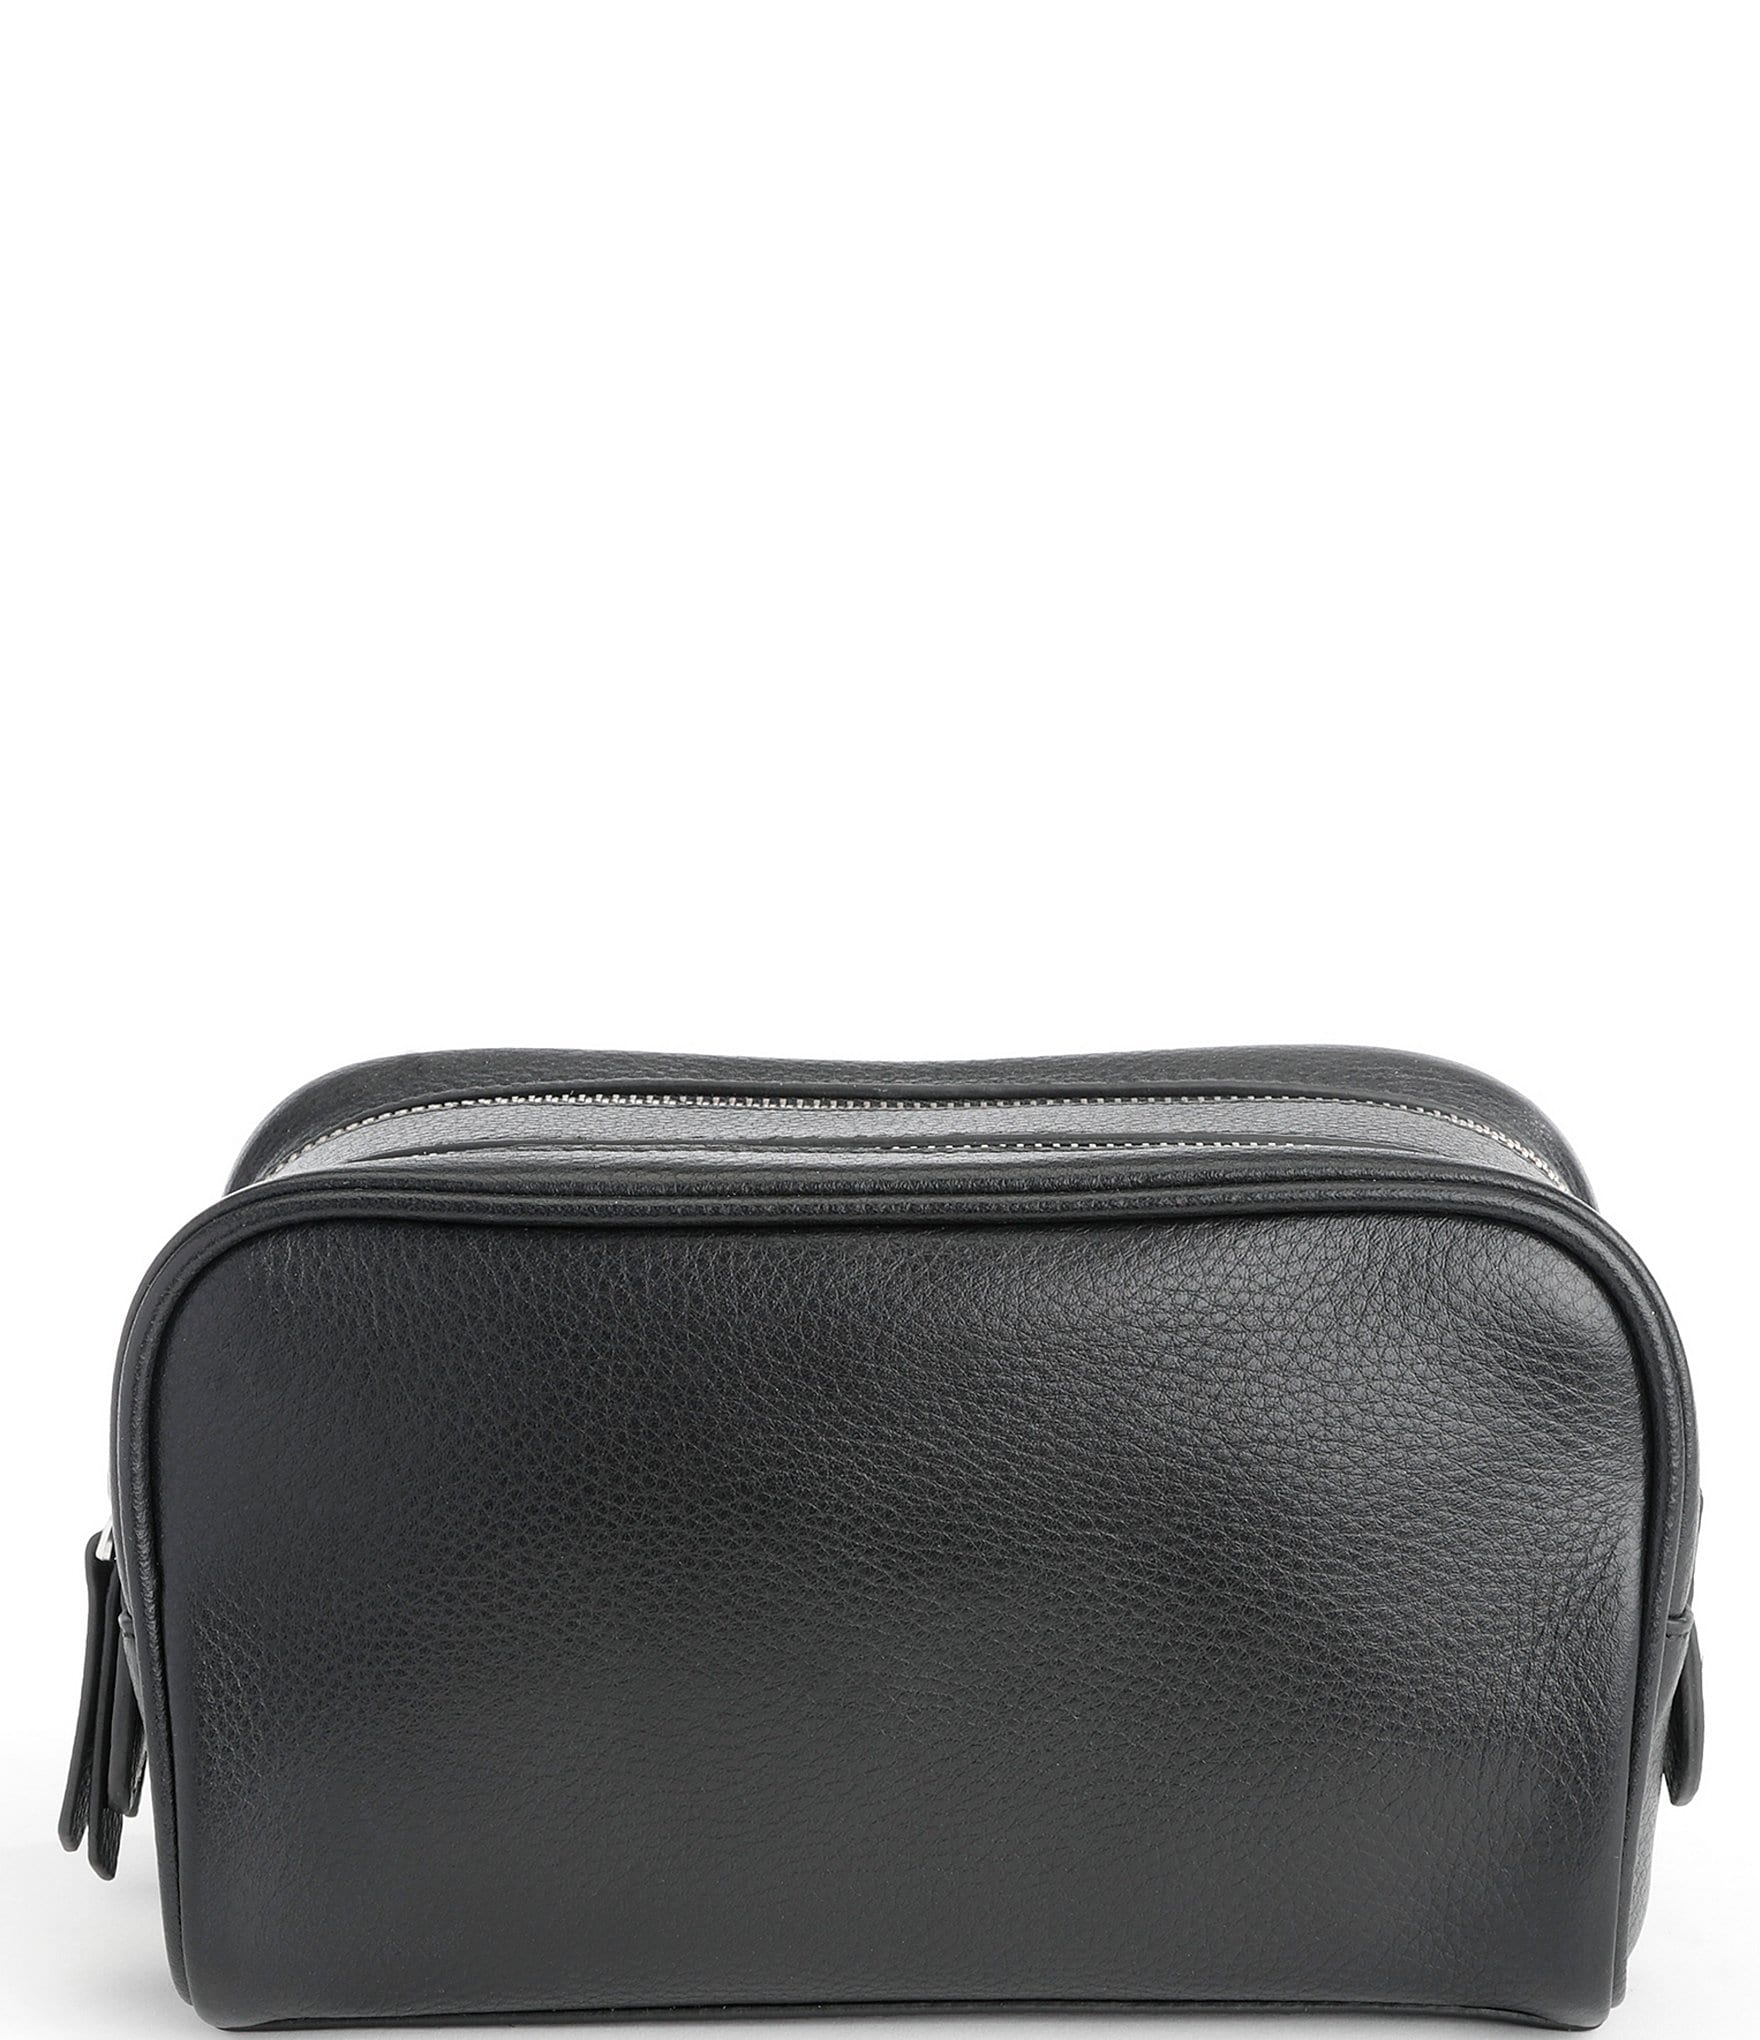 ROYCE New York Leather Double Zip Toiletry Bag | Dillard's